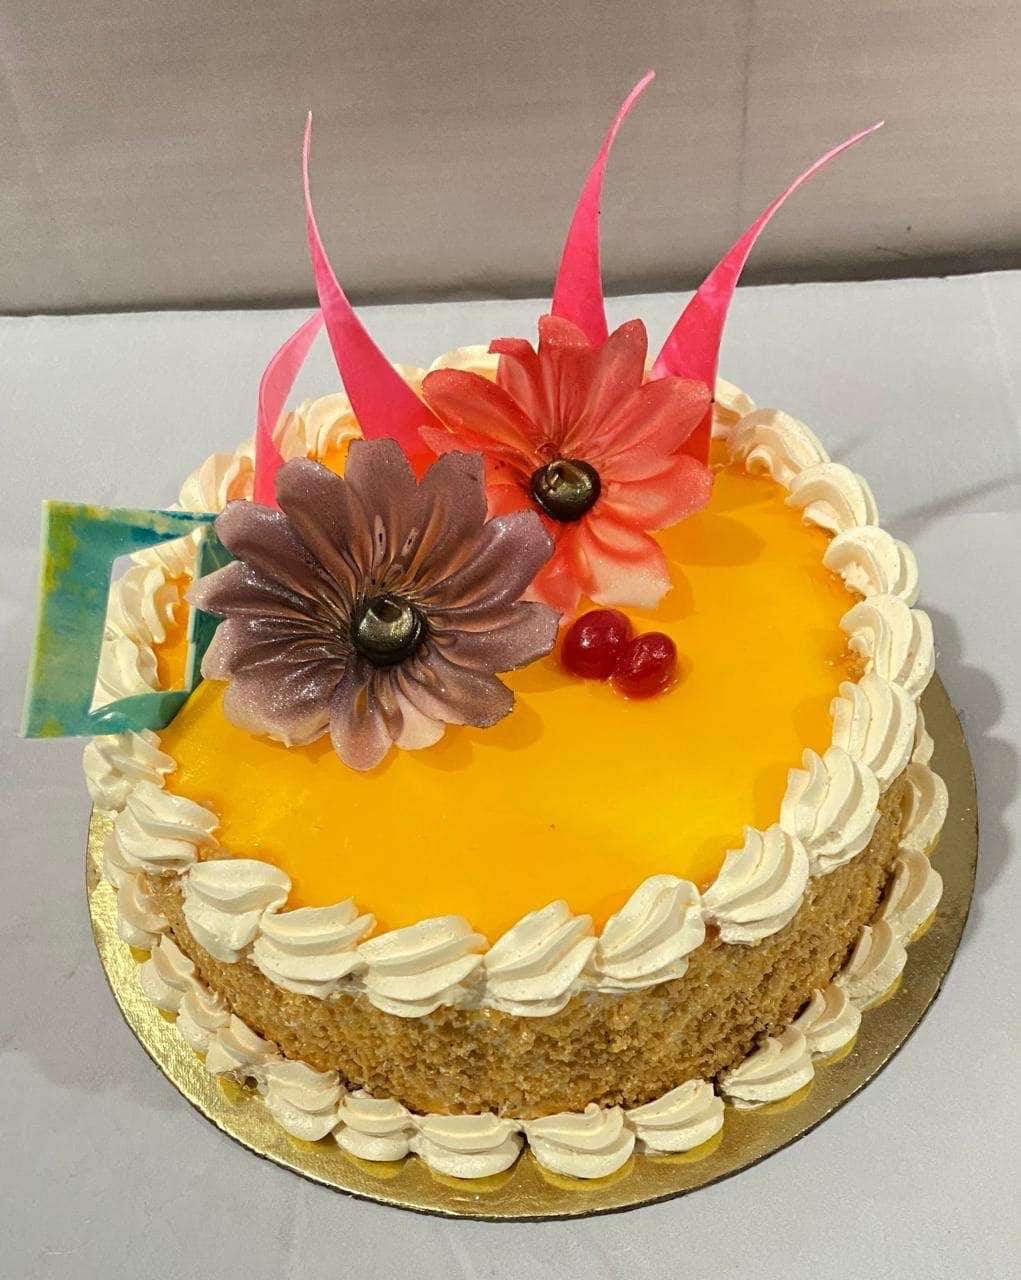 Wedding/Engagement cake 💍 | Instagram